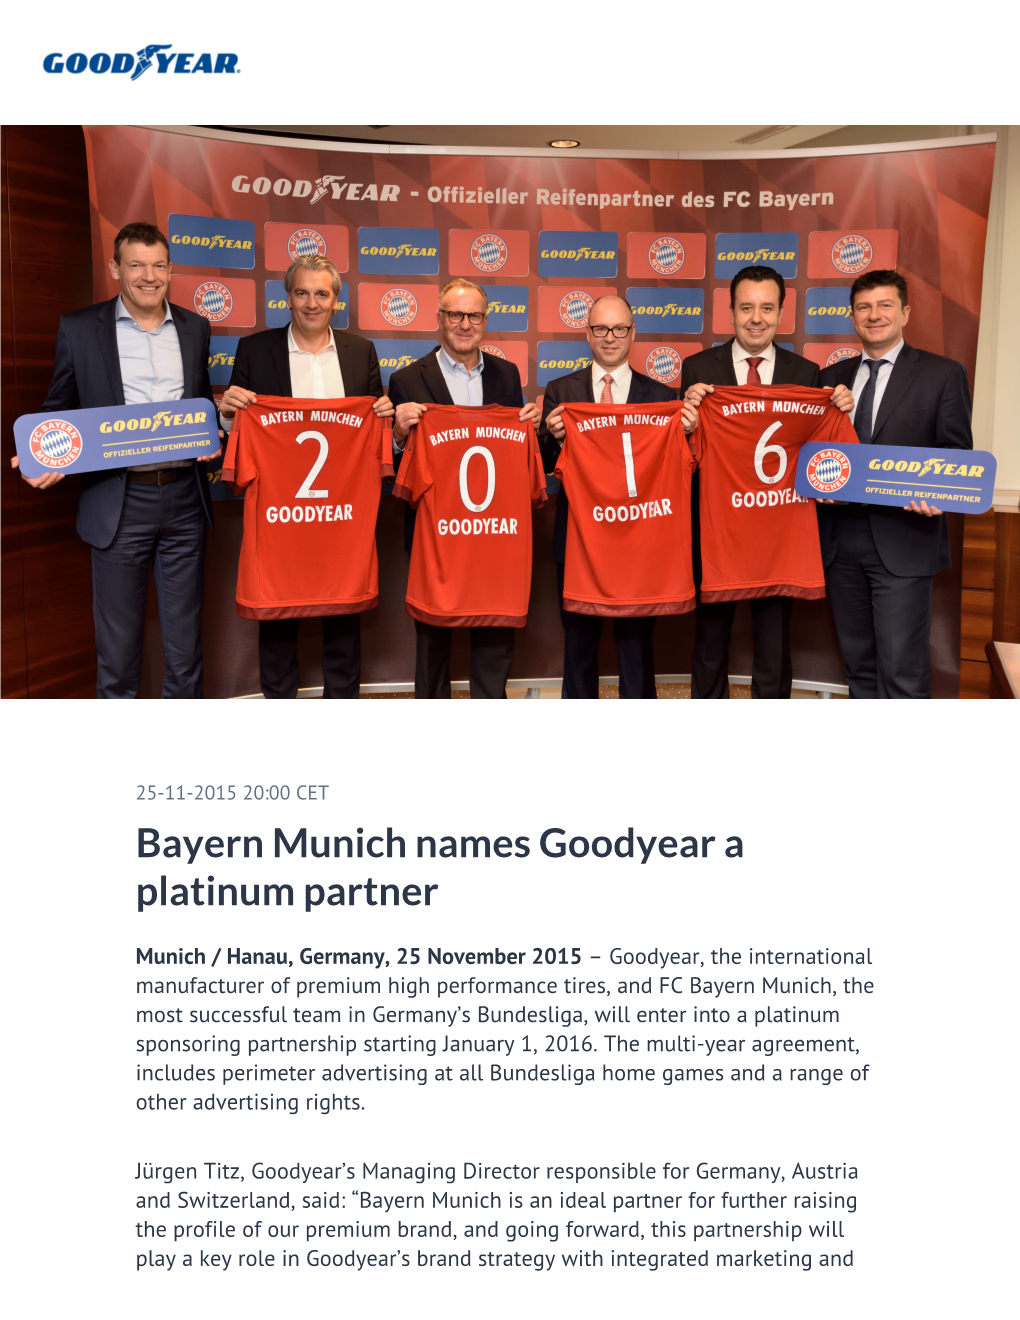 Bayern Munich Names Goodyear a Platinum Partner